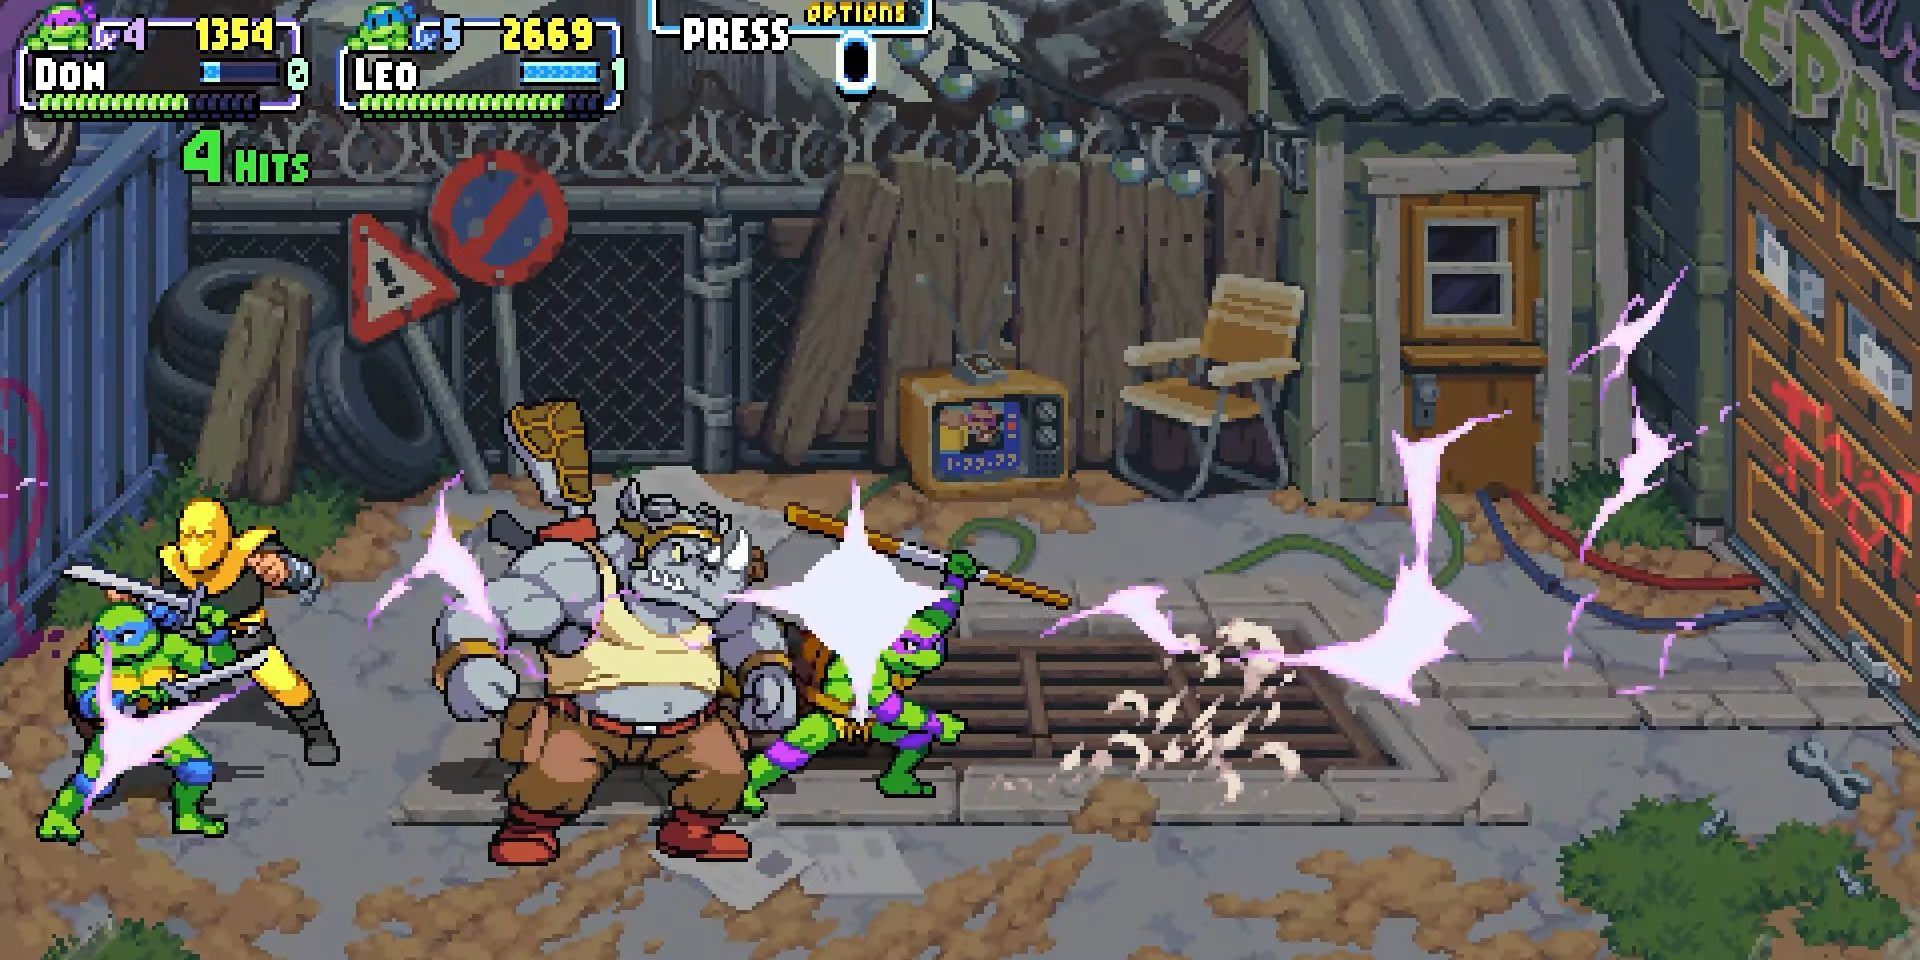 A screenshot showing Donatello and Leonardo performing a Sandwich Attack on Rocksteady in Teenage Mutant Ninja Turtles: Shredder's Revenge